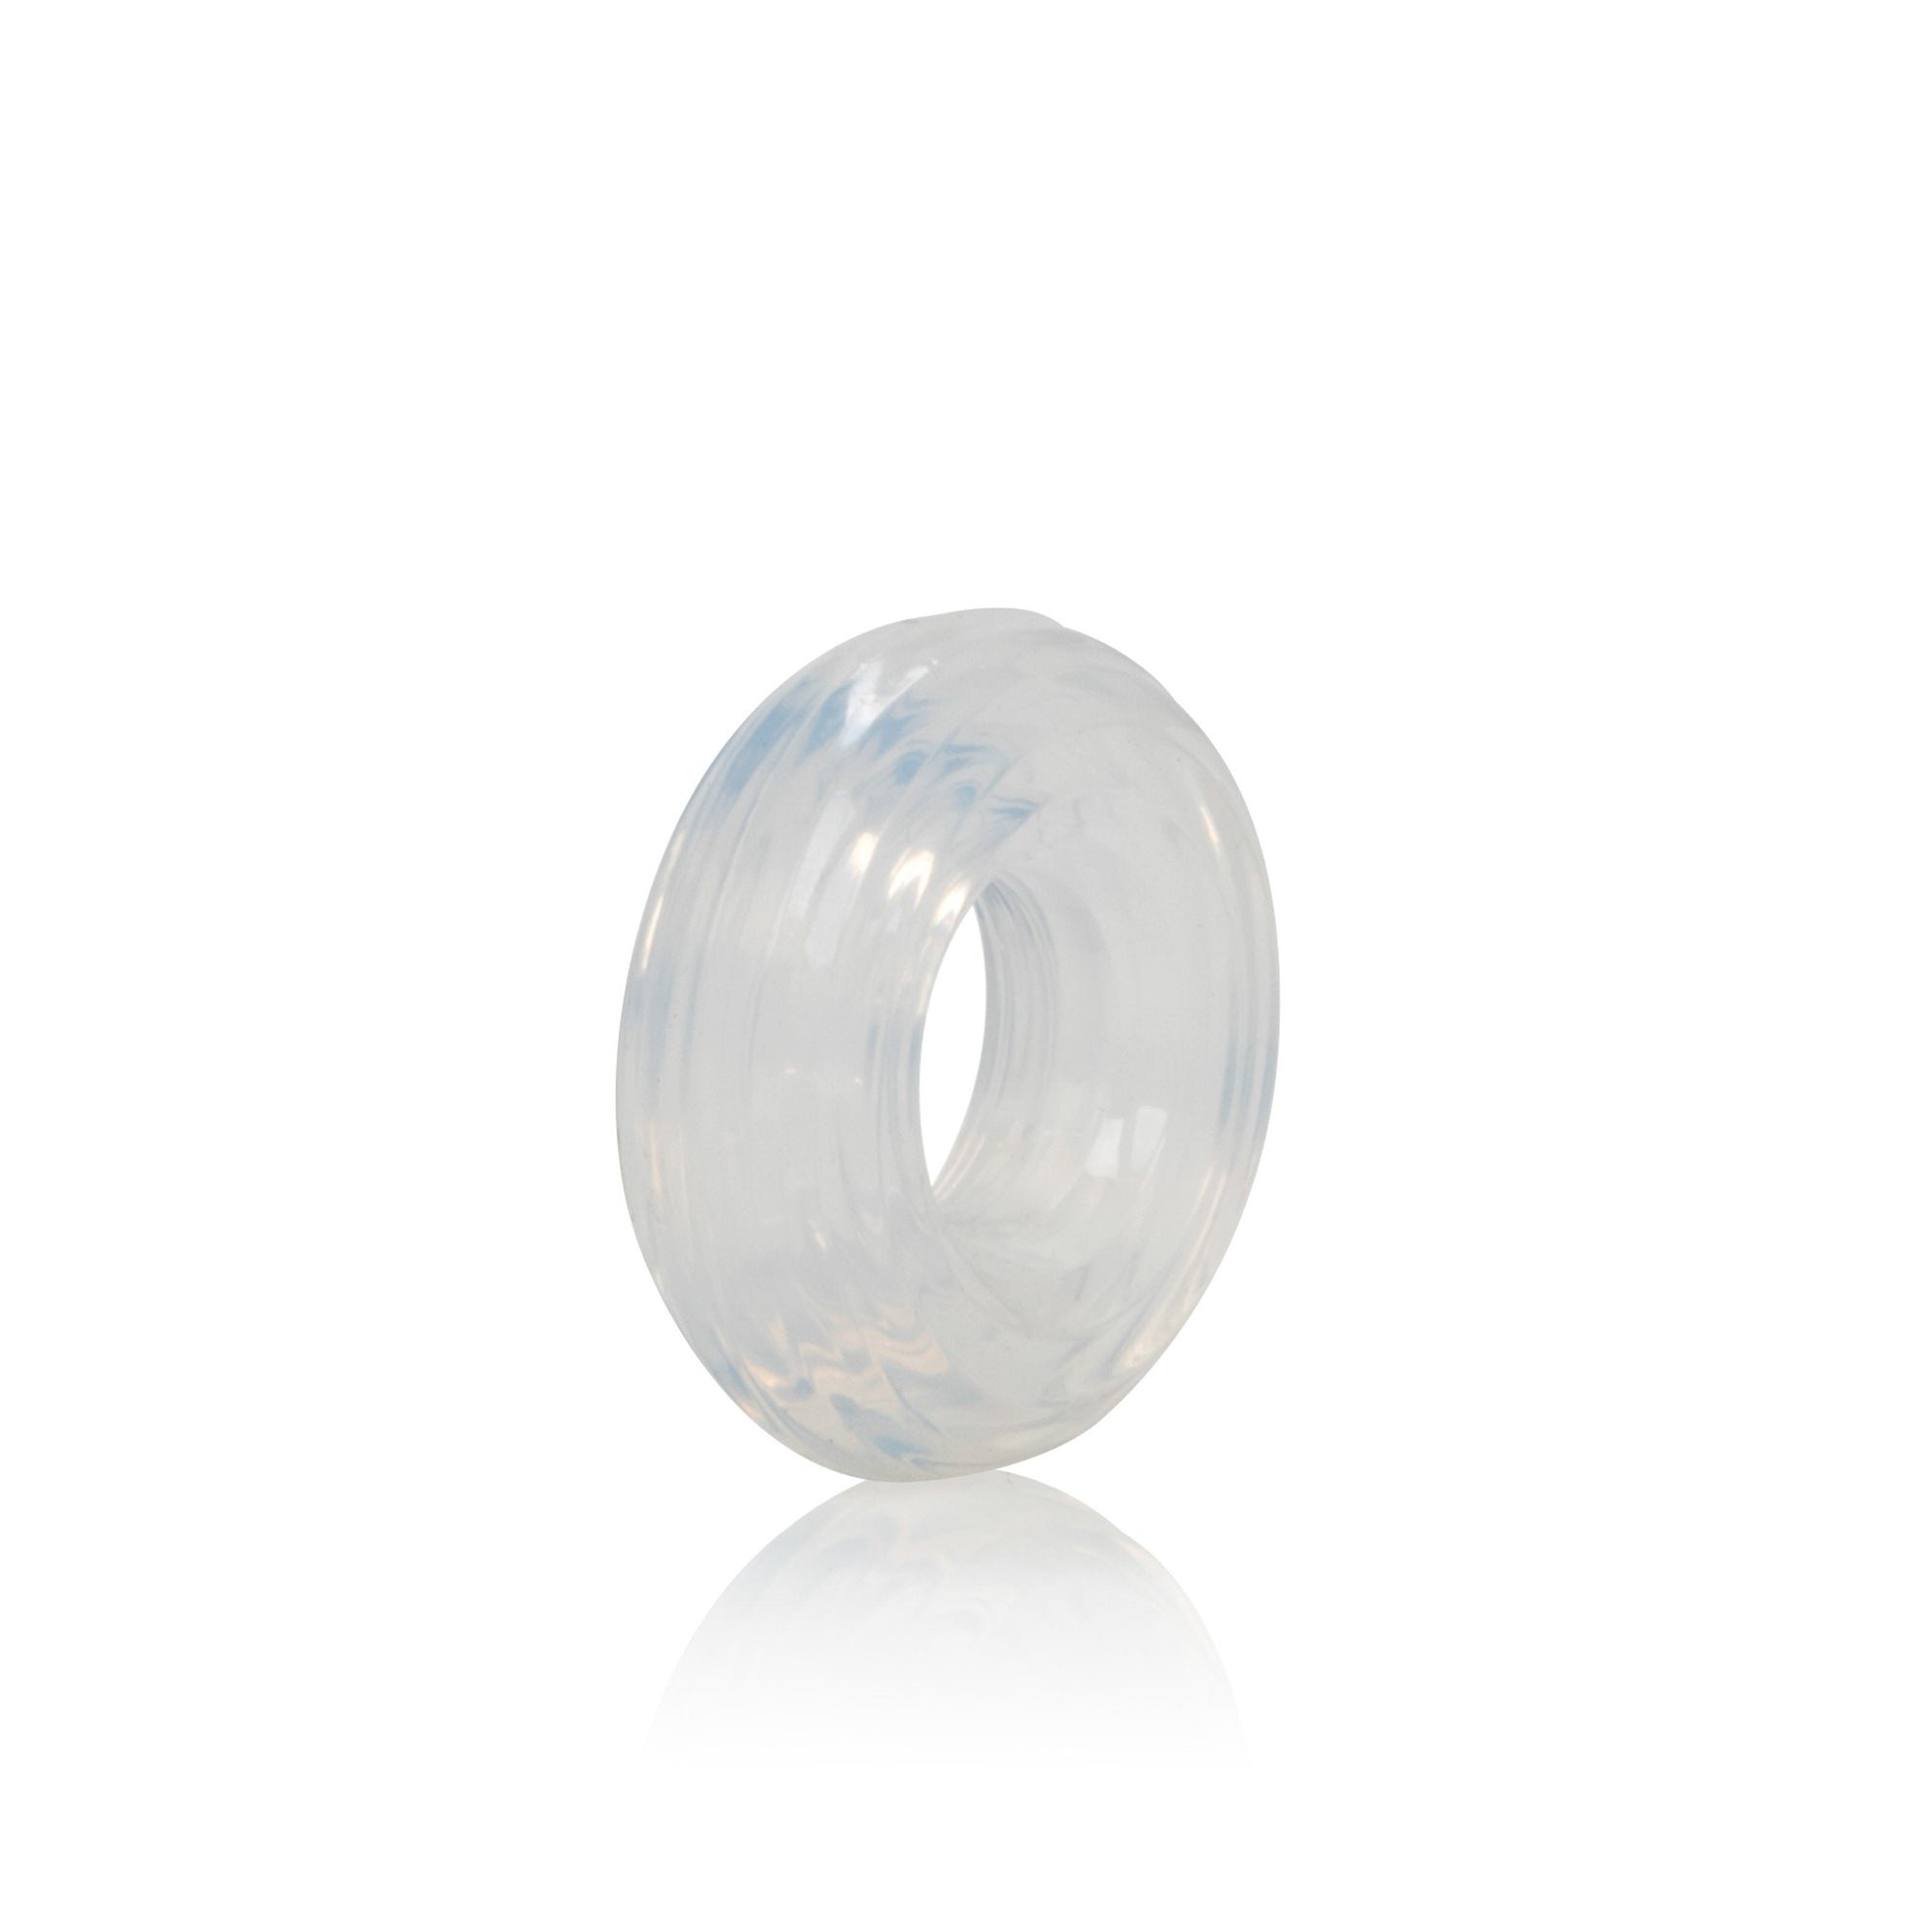 California Exotics - Premium Silicone Cock Ring Medium (Clear) -  Silicone Cock Ring (Non Vibration)  Durio.sg